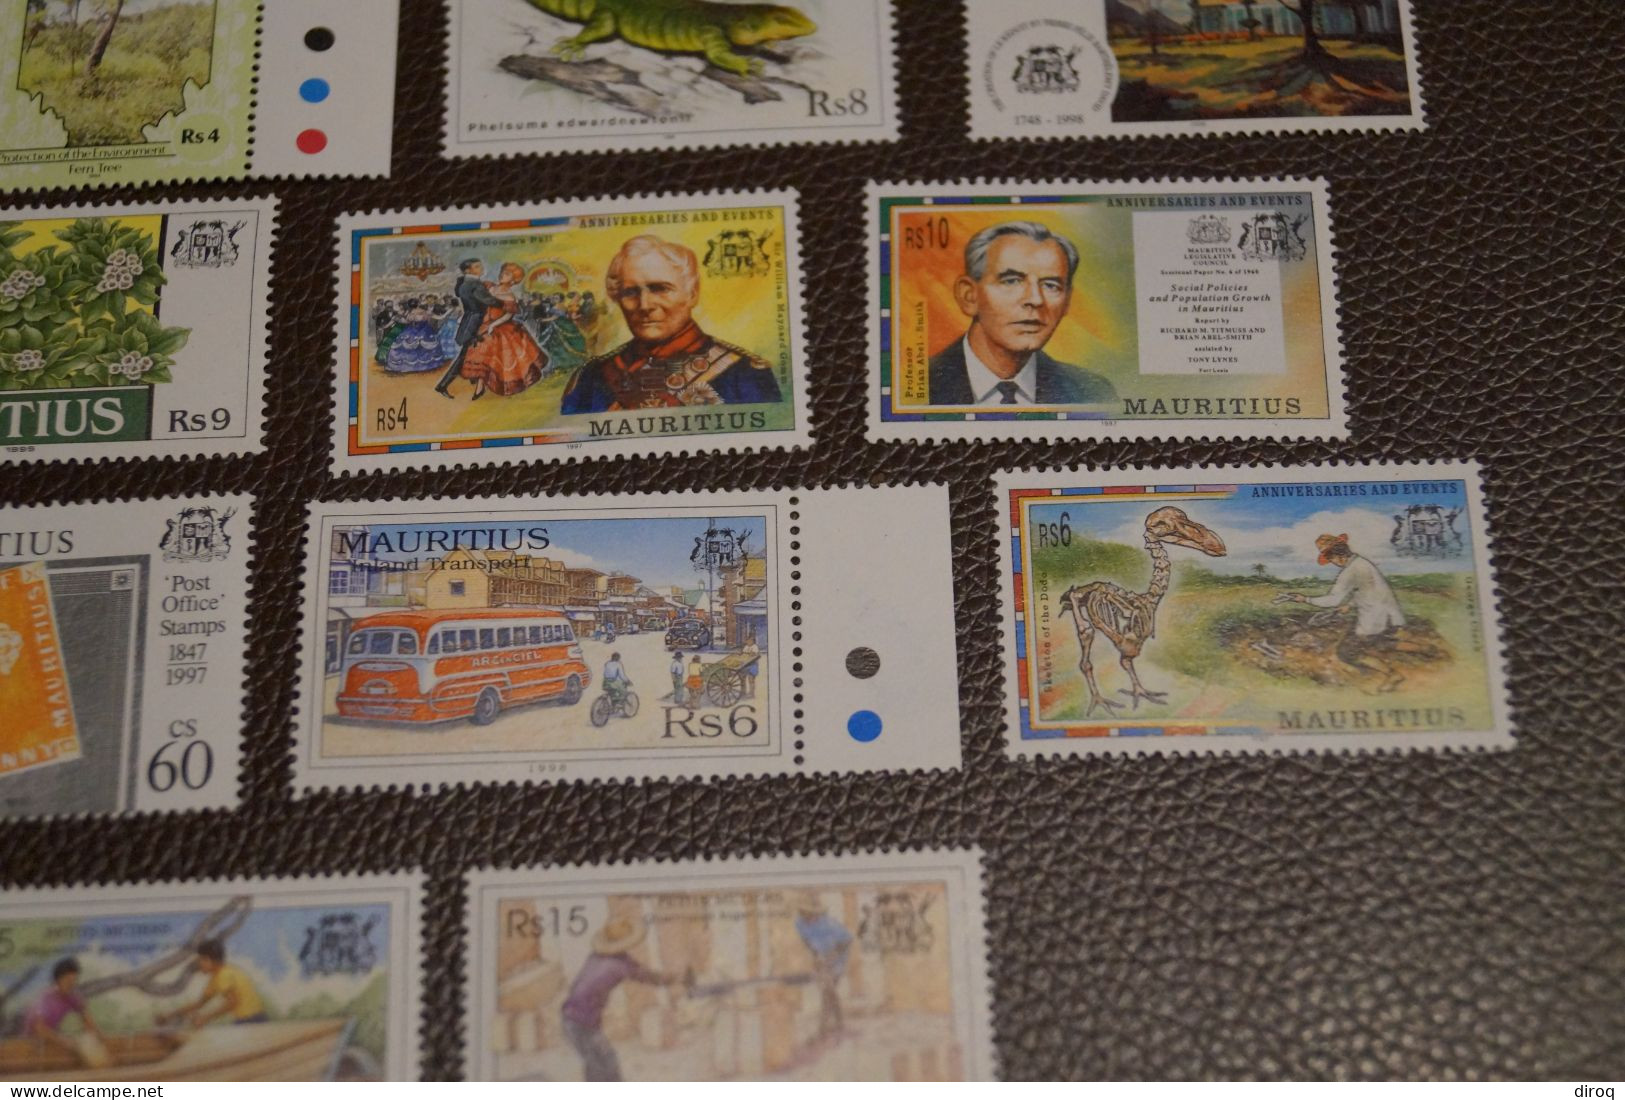 Mauritius,superbe lot de 21 timbres neuf pour collection